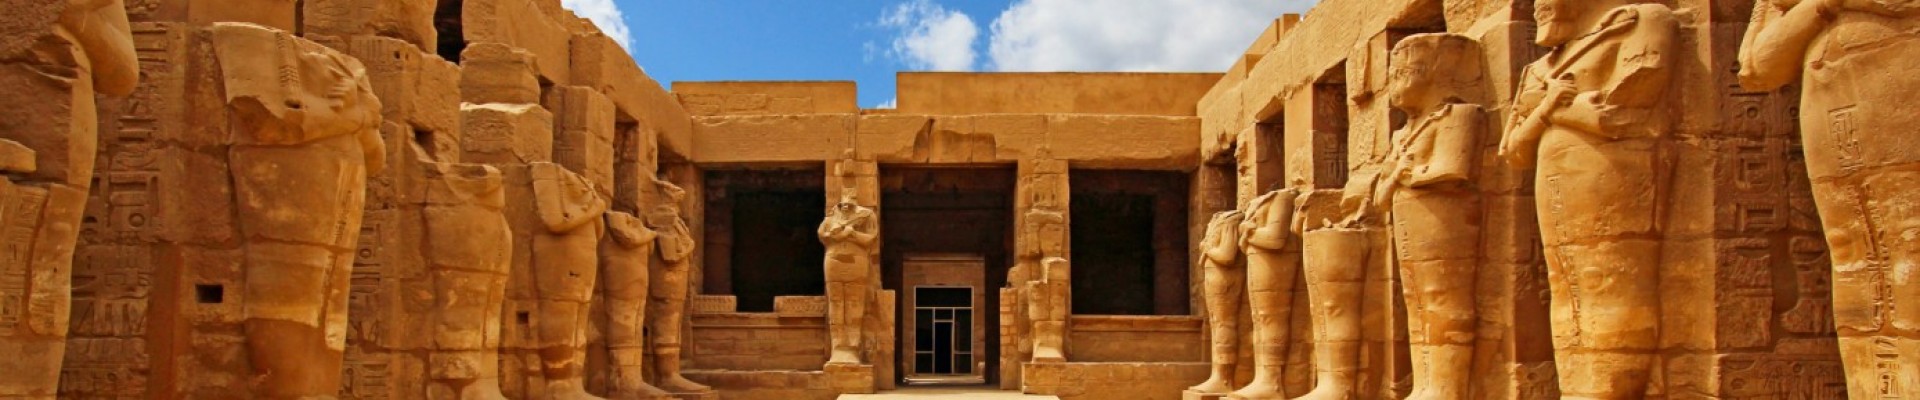 5* Tolip Hotel - Aswan - Egypt Package (4 nights)